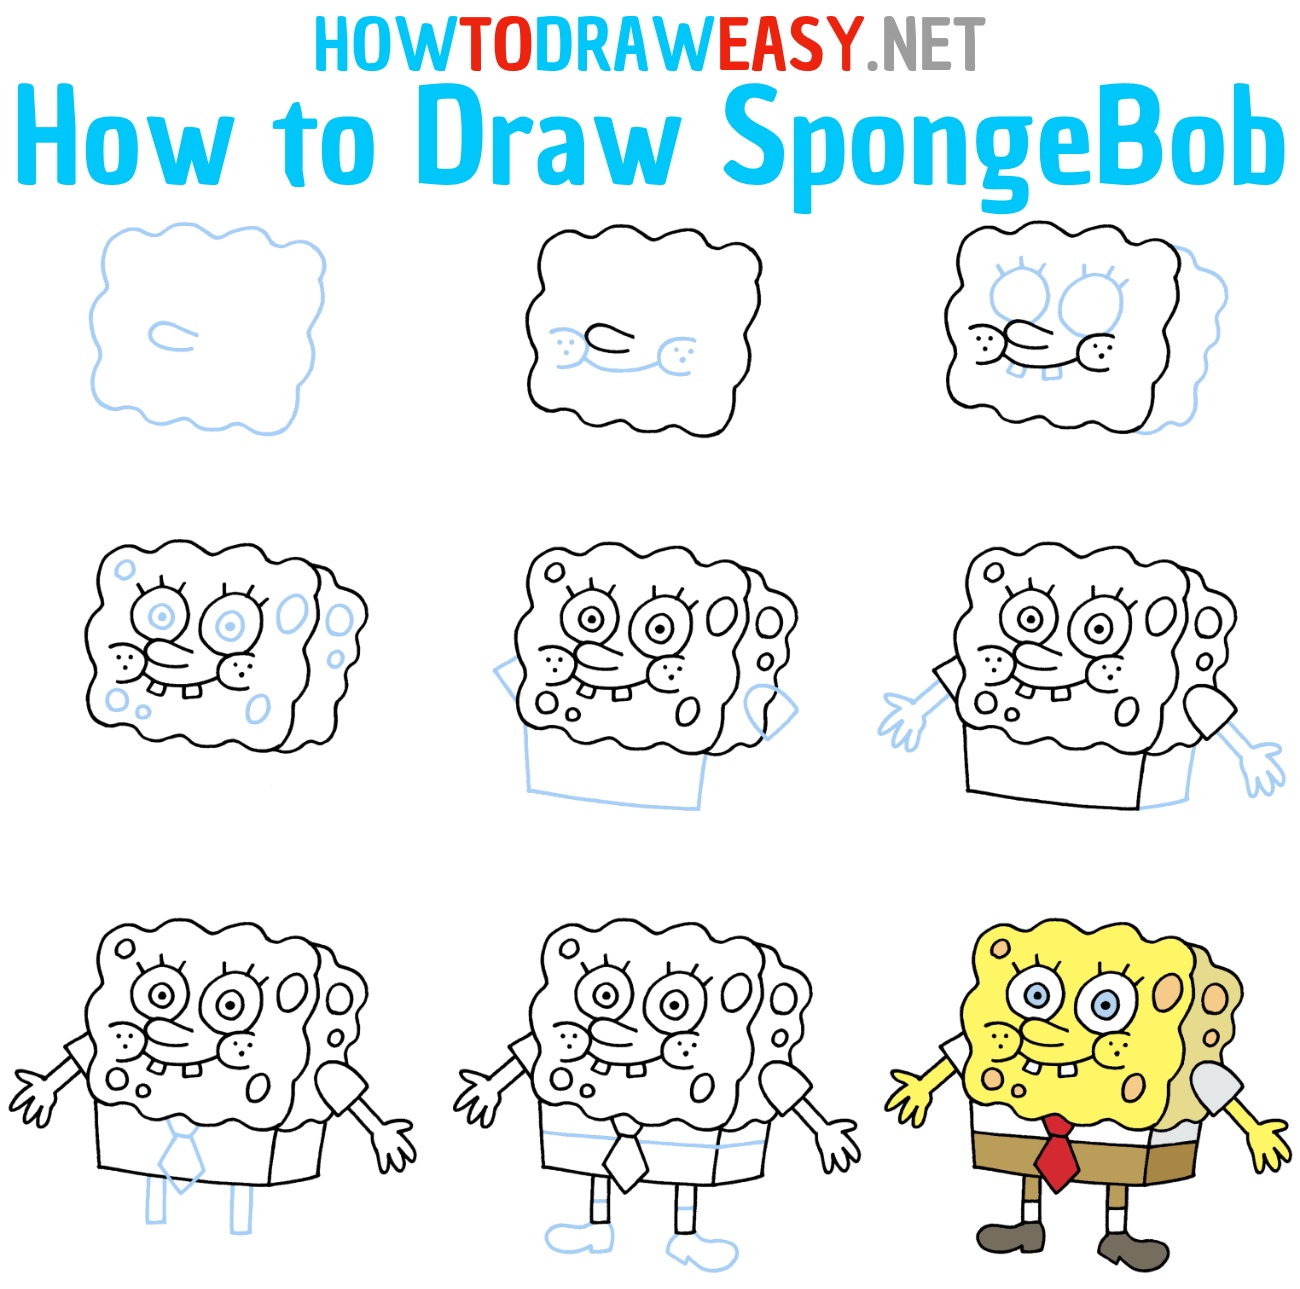 How to Draw SpongeBob SquarePants Step by Step